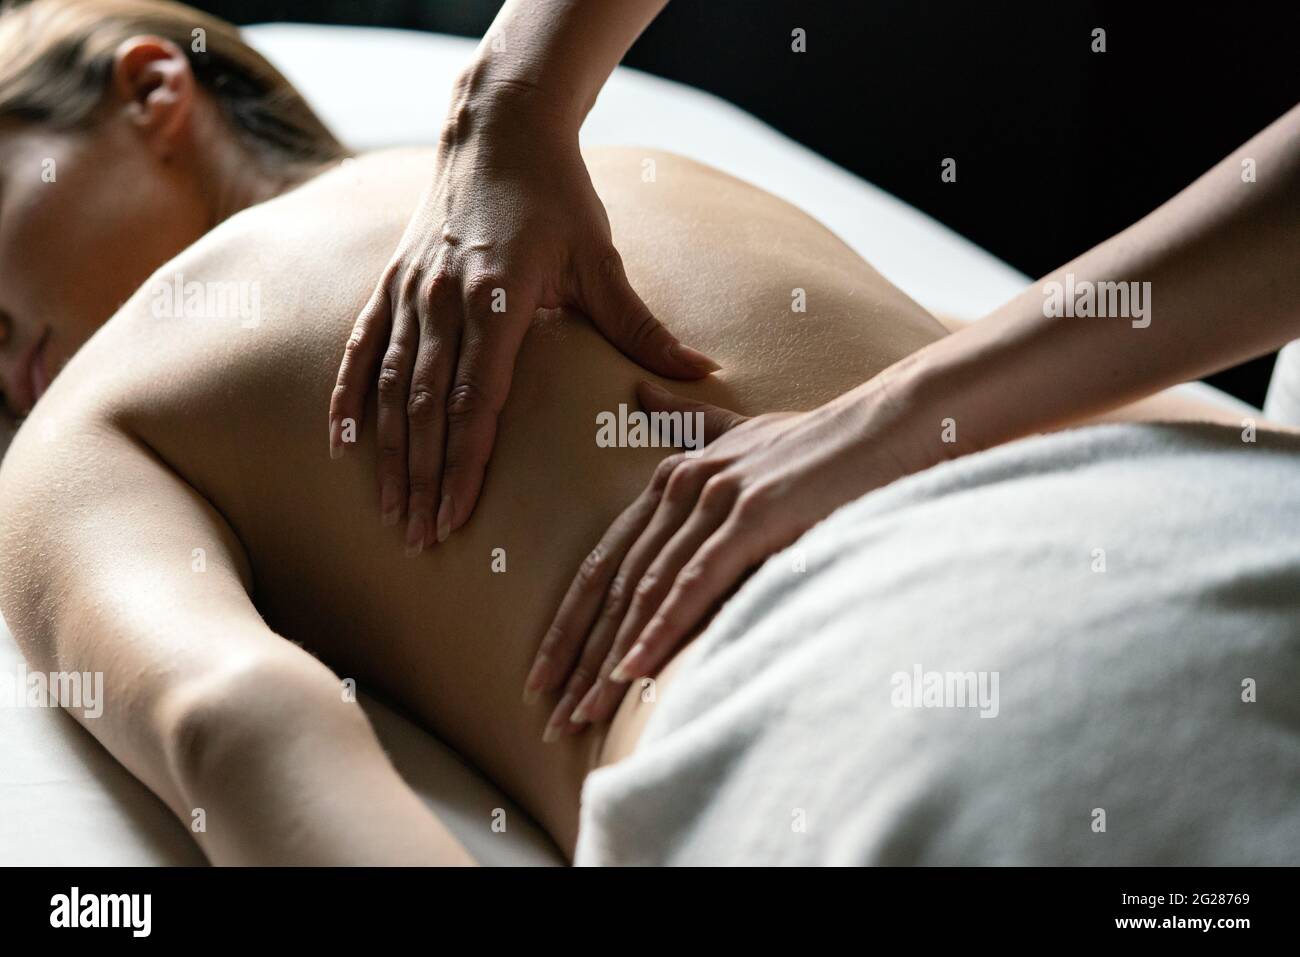 Healthy woman having massage therapy at spa salon Stock Photo